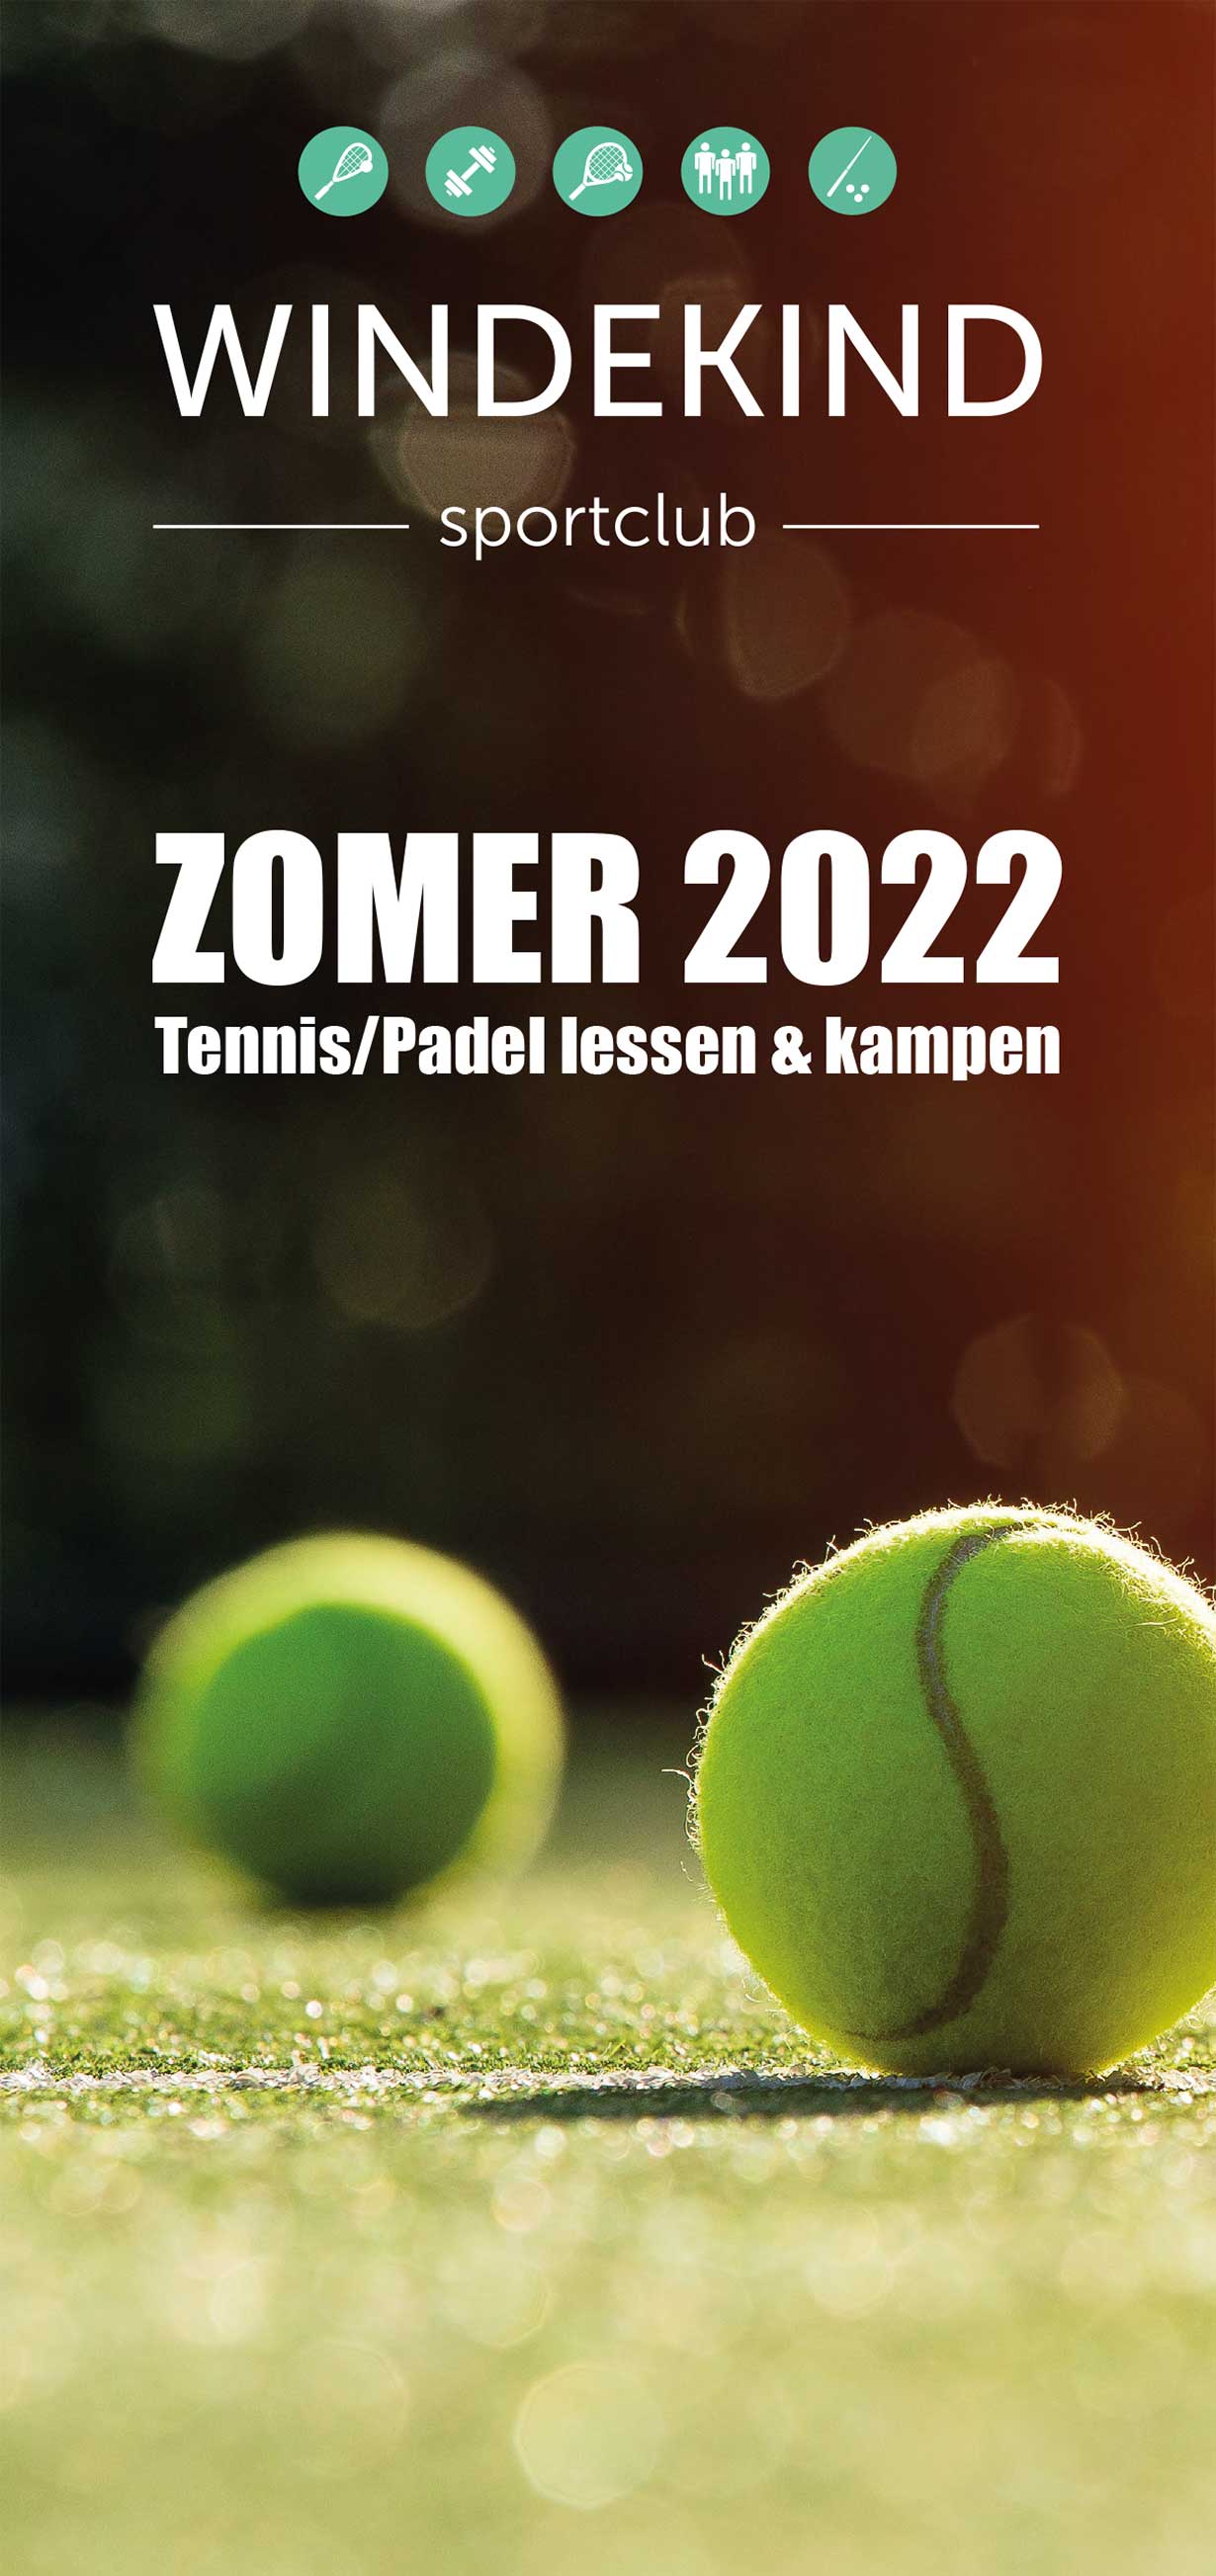 Tennis- en Padelschool Windekind Zomer 2022